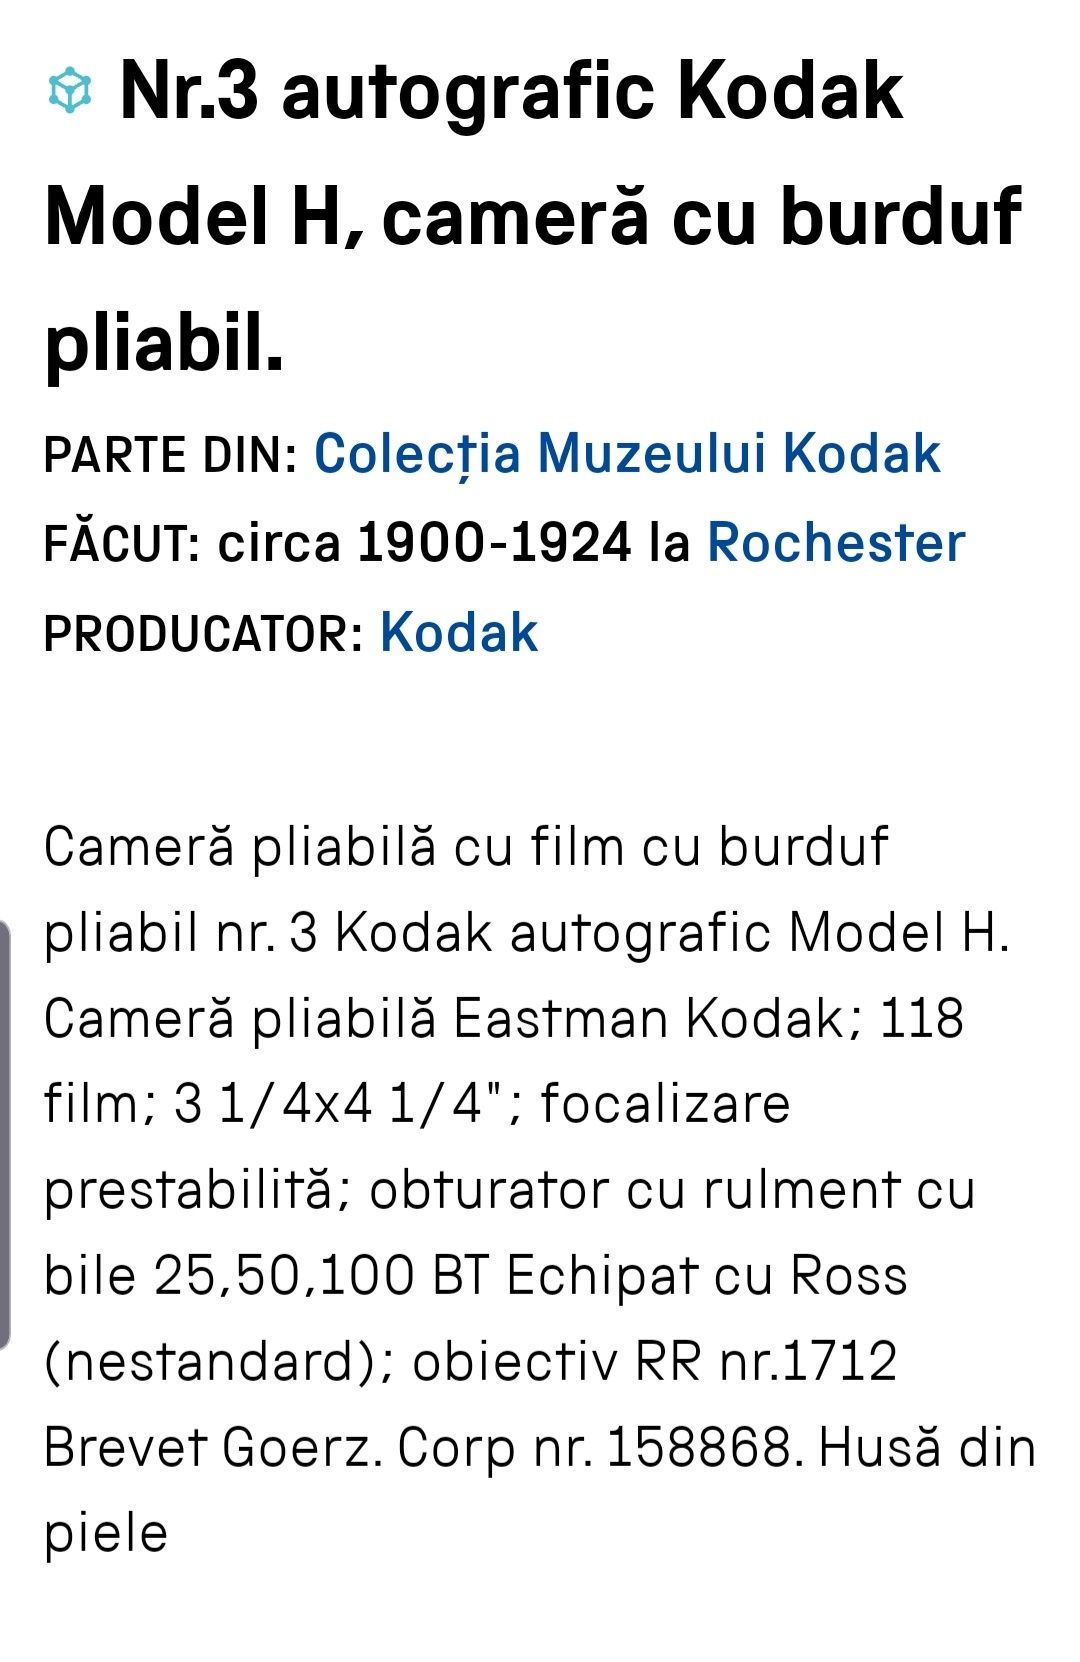 Aparat foto Kodak 1904-1909